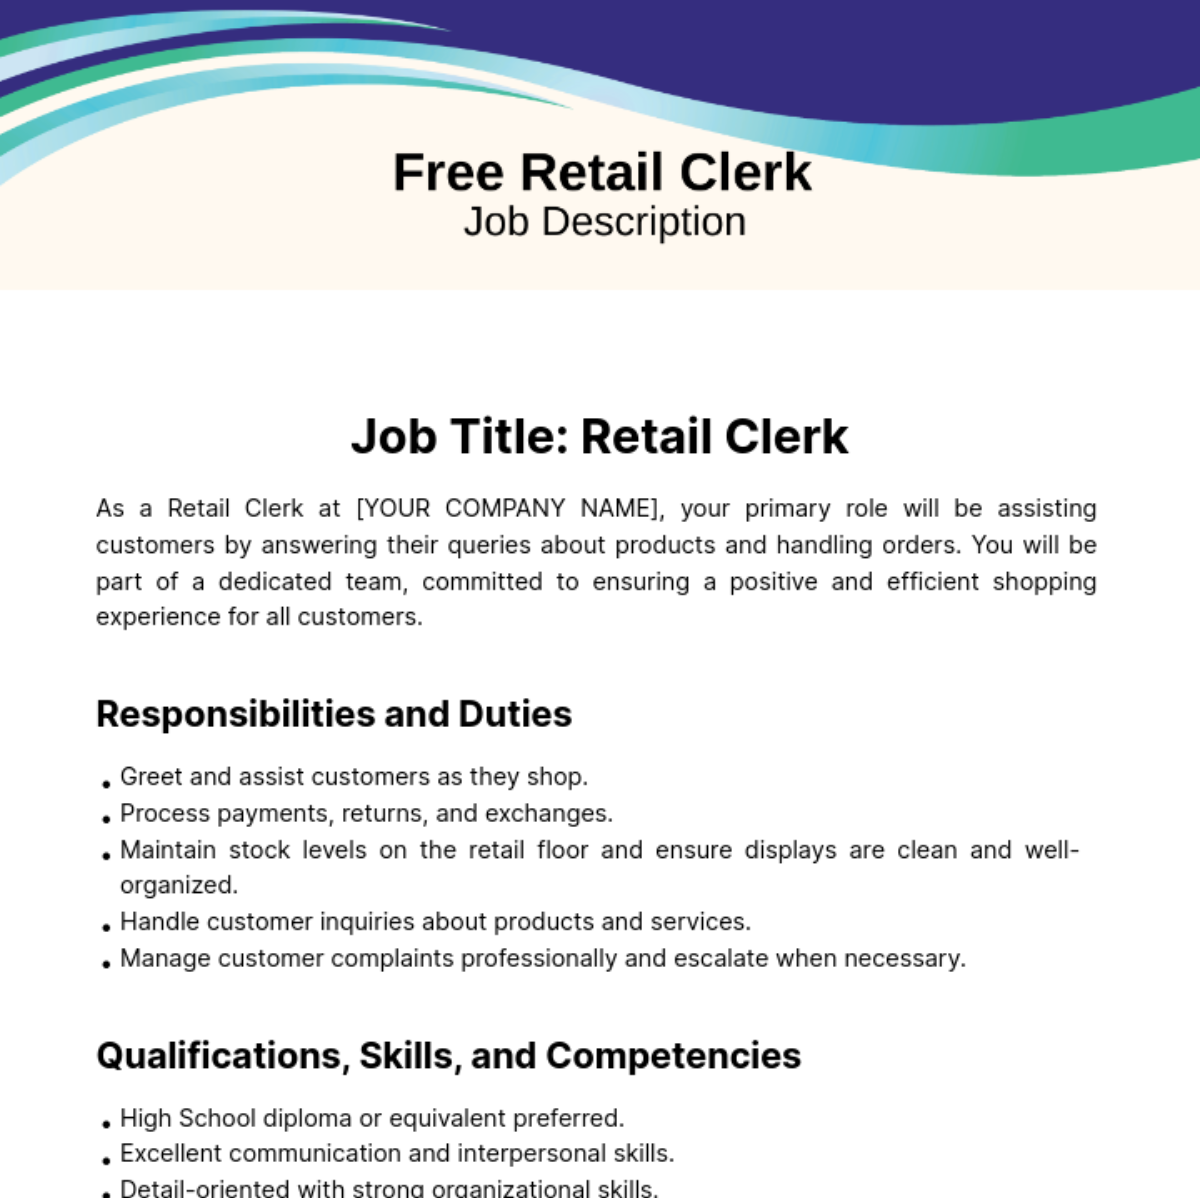 Free Retail Clerk Job Description Template